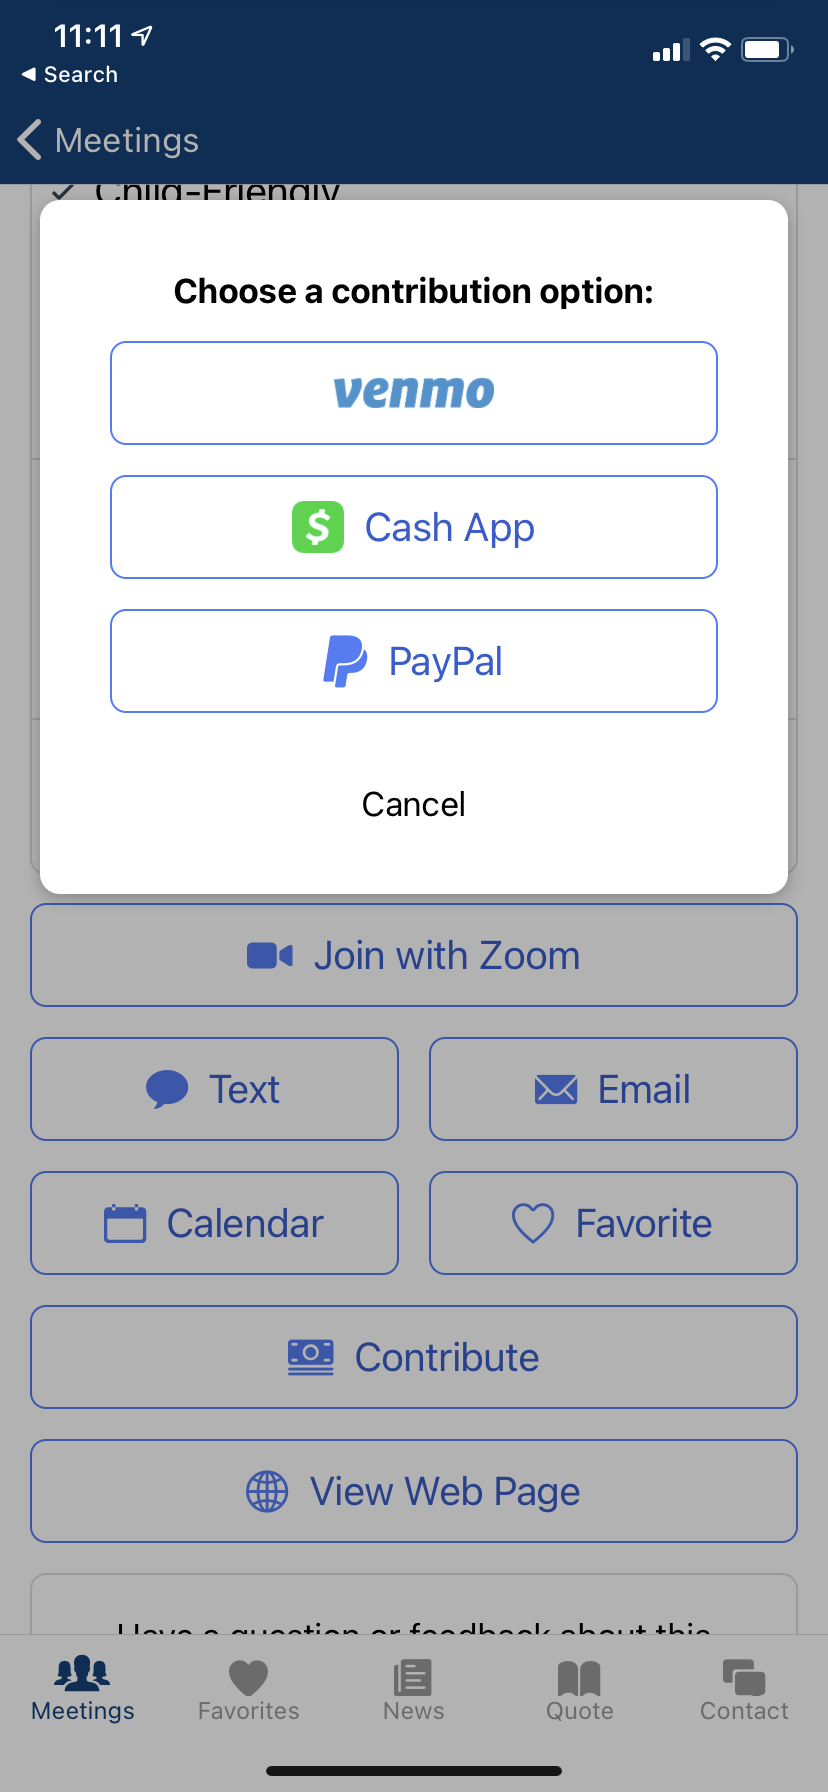 screen shot showing contribution options